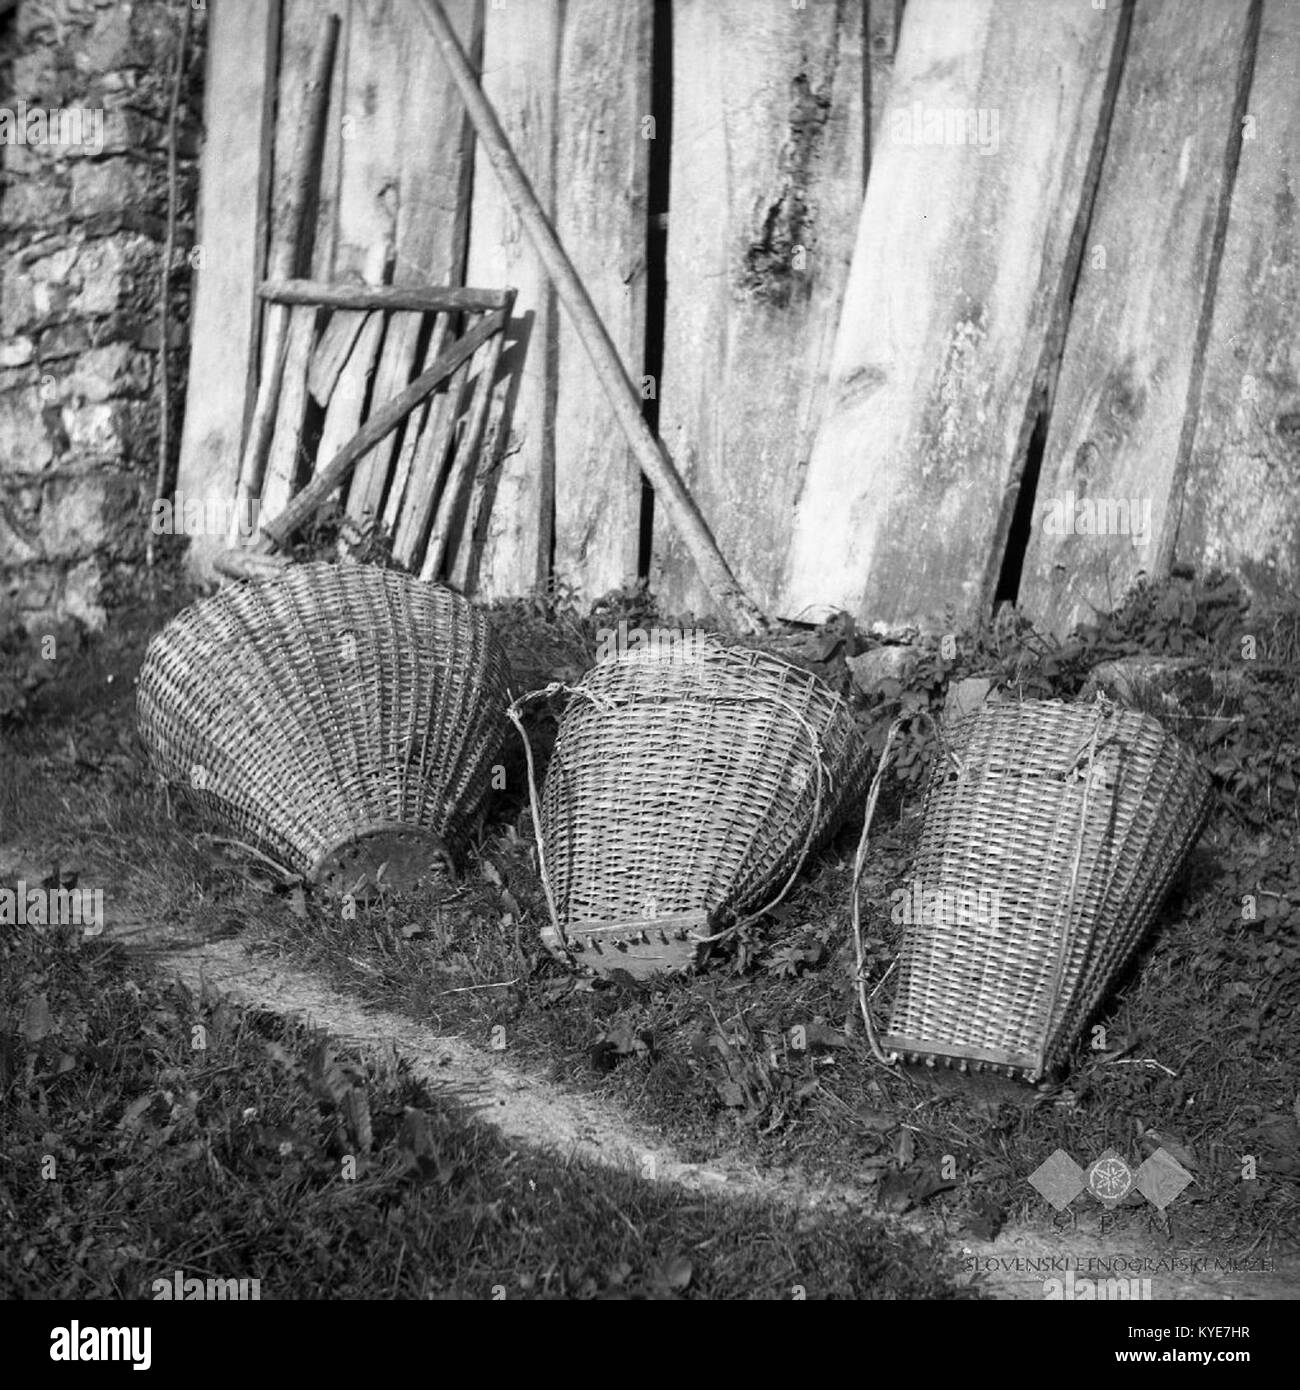 Trije različni koši, listənk za listje, upərtouənk in koš - lahek za v mlin  itd., Otalež 1954 Stock Photo - Alamy